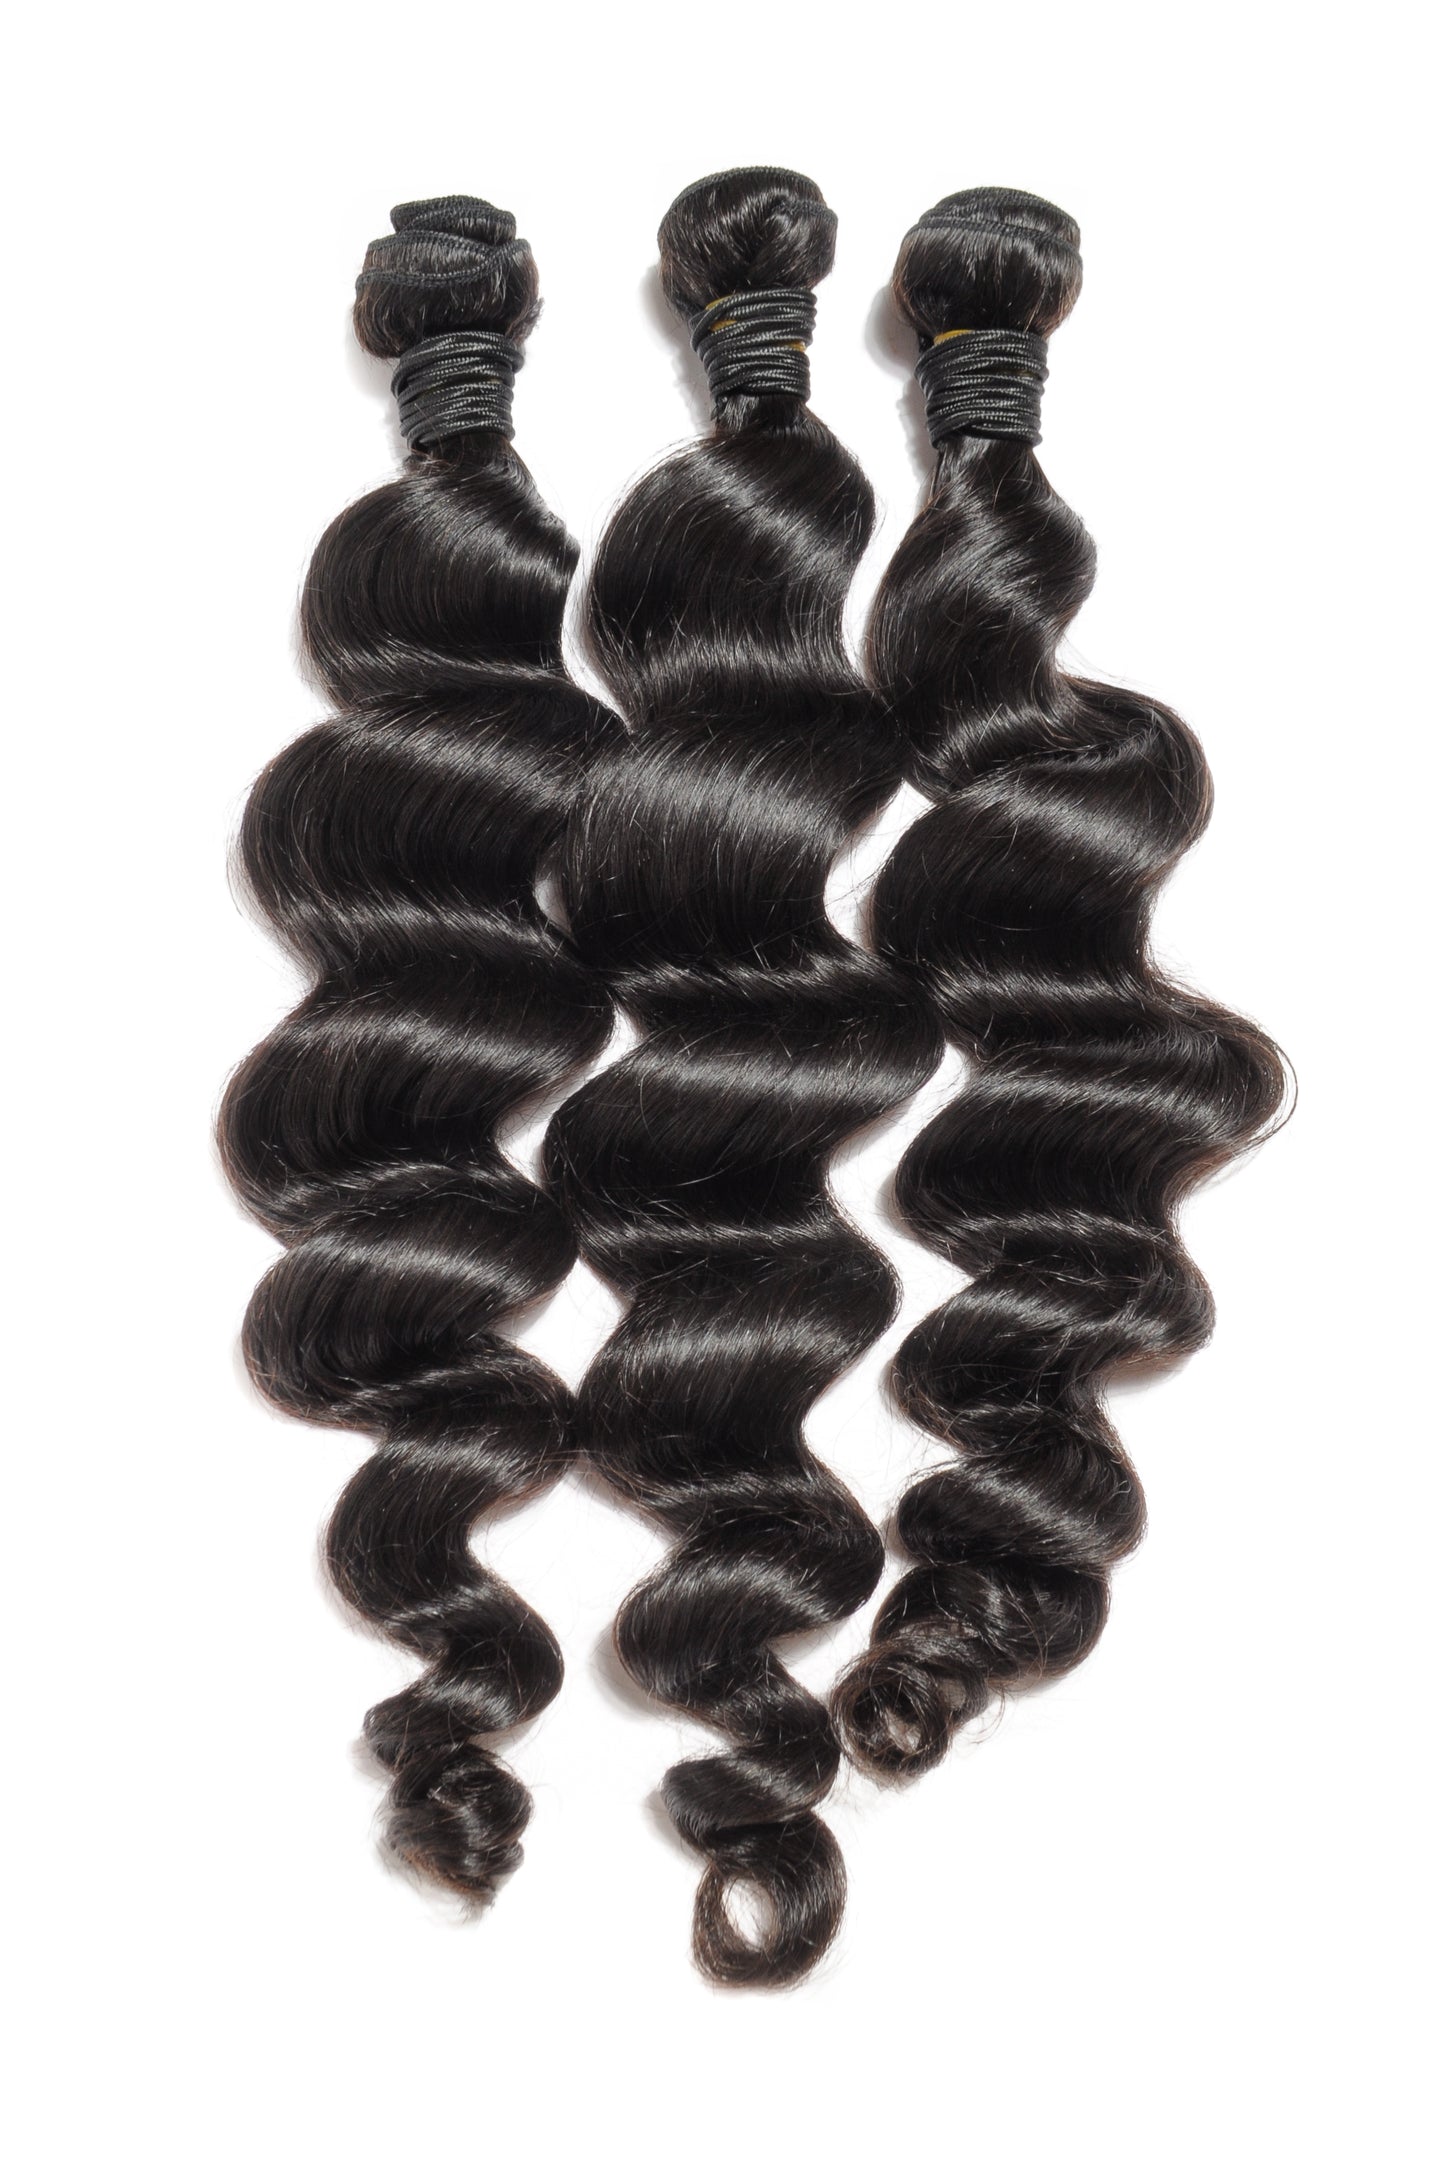 Three spiral black curly hair extensions bundles